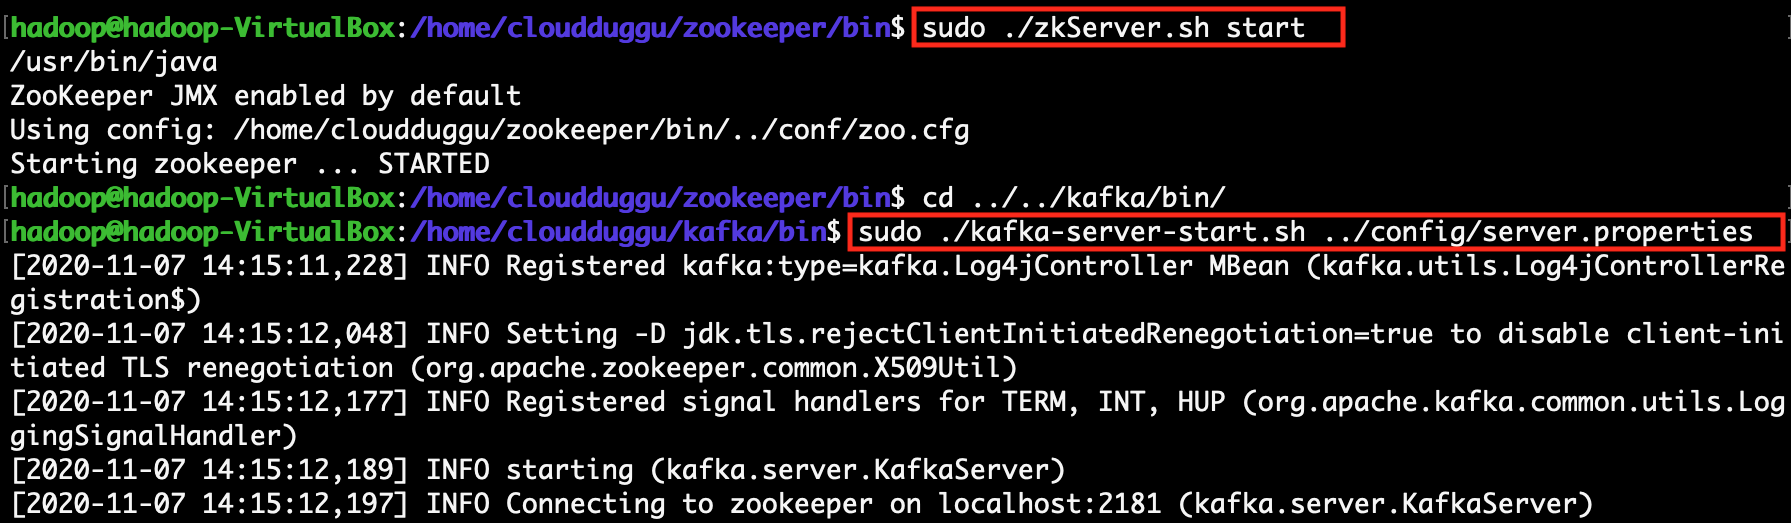 Start Zookeeper and Kafka Server